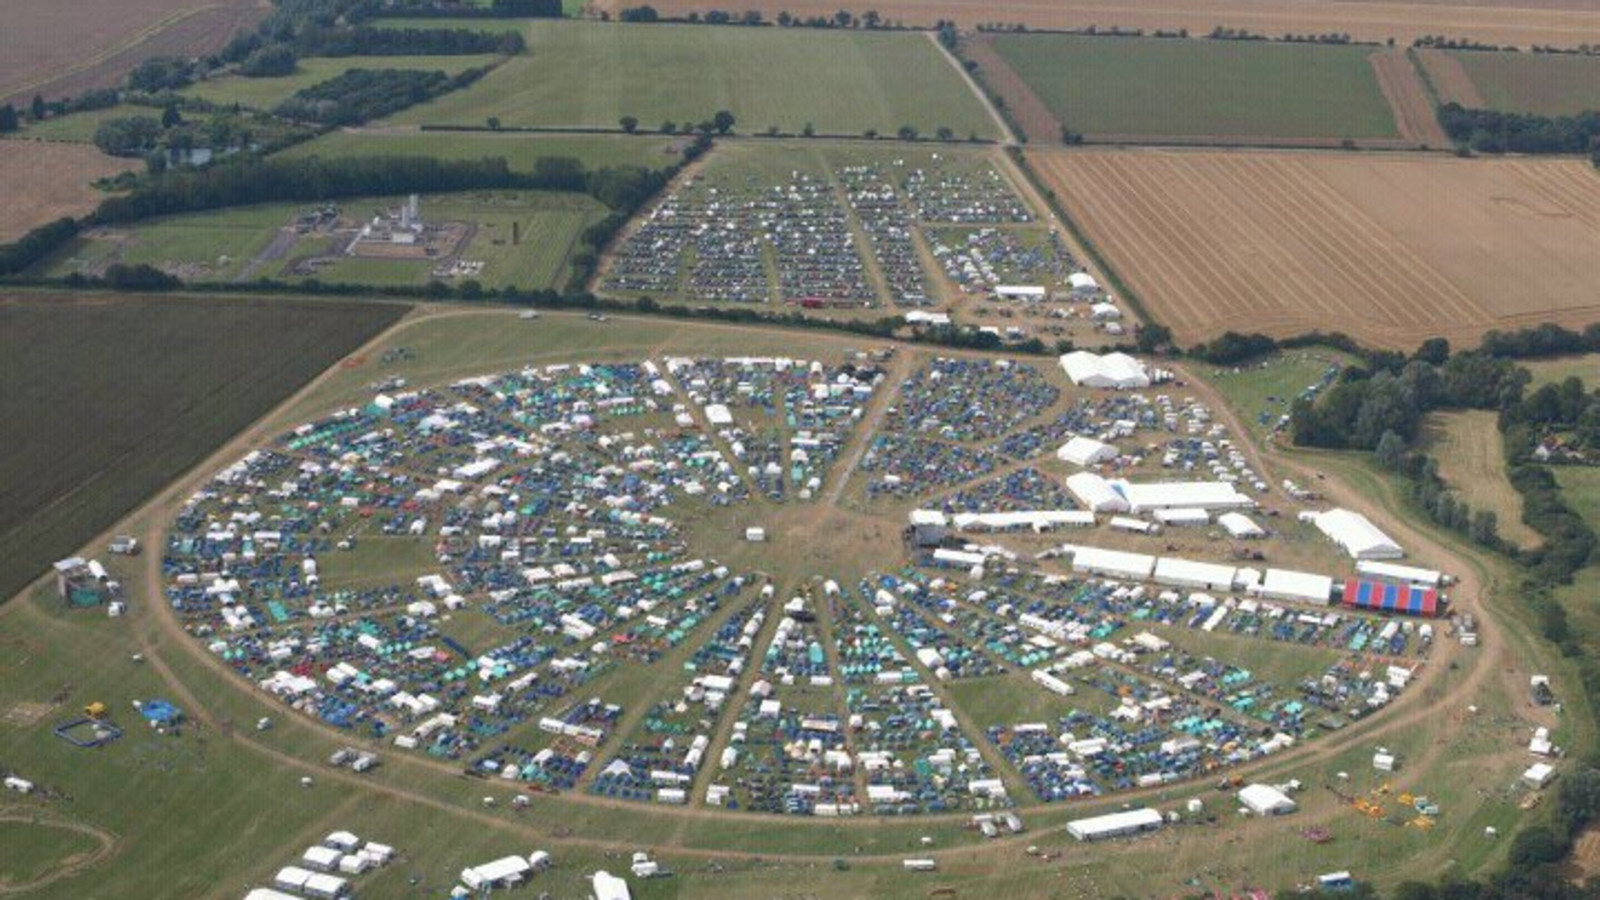 Essex Jamboree from the air